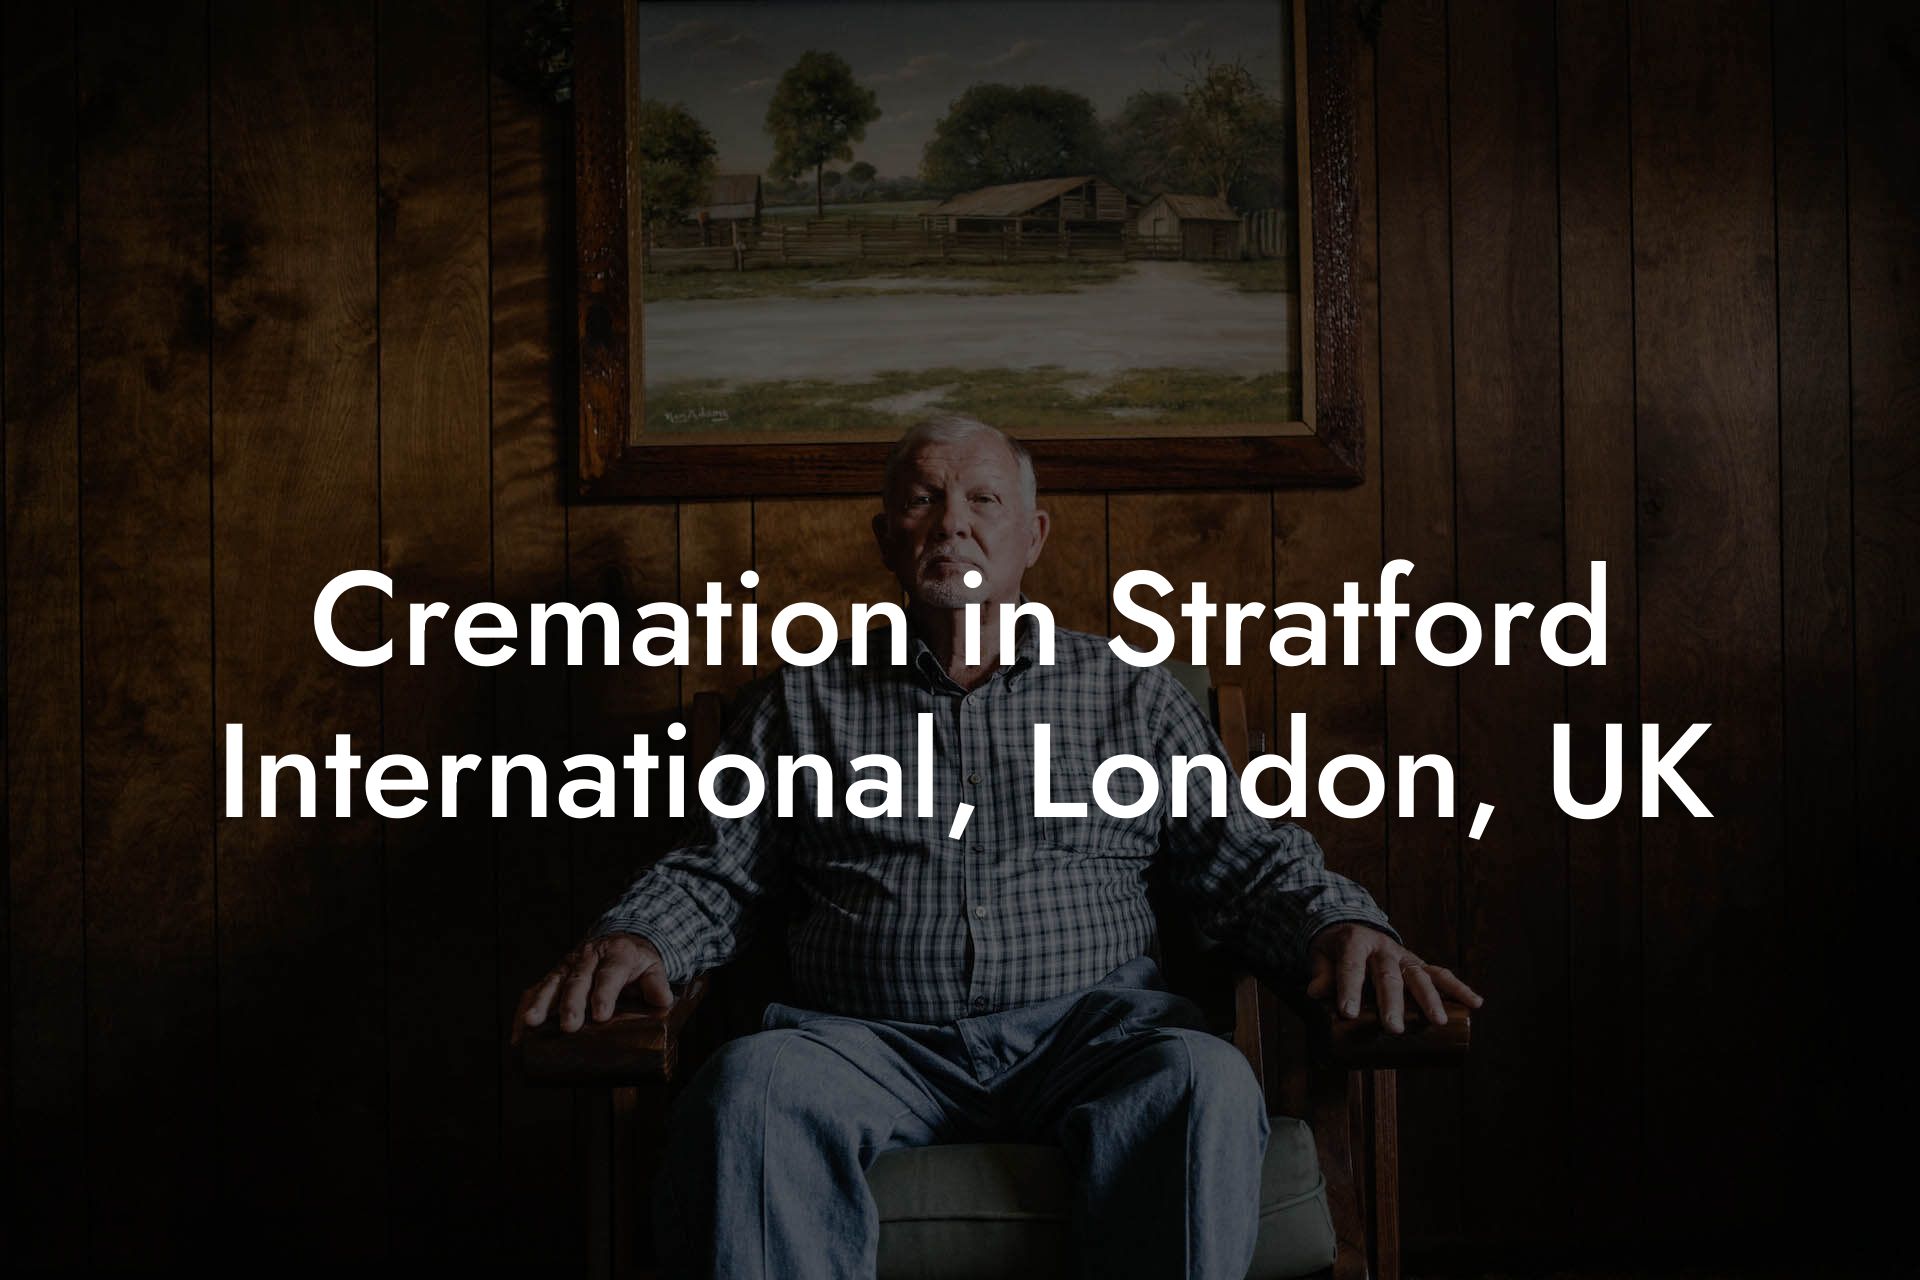 Cremation in Stratford International, London, UK